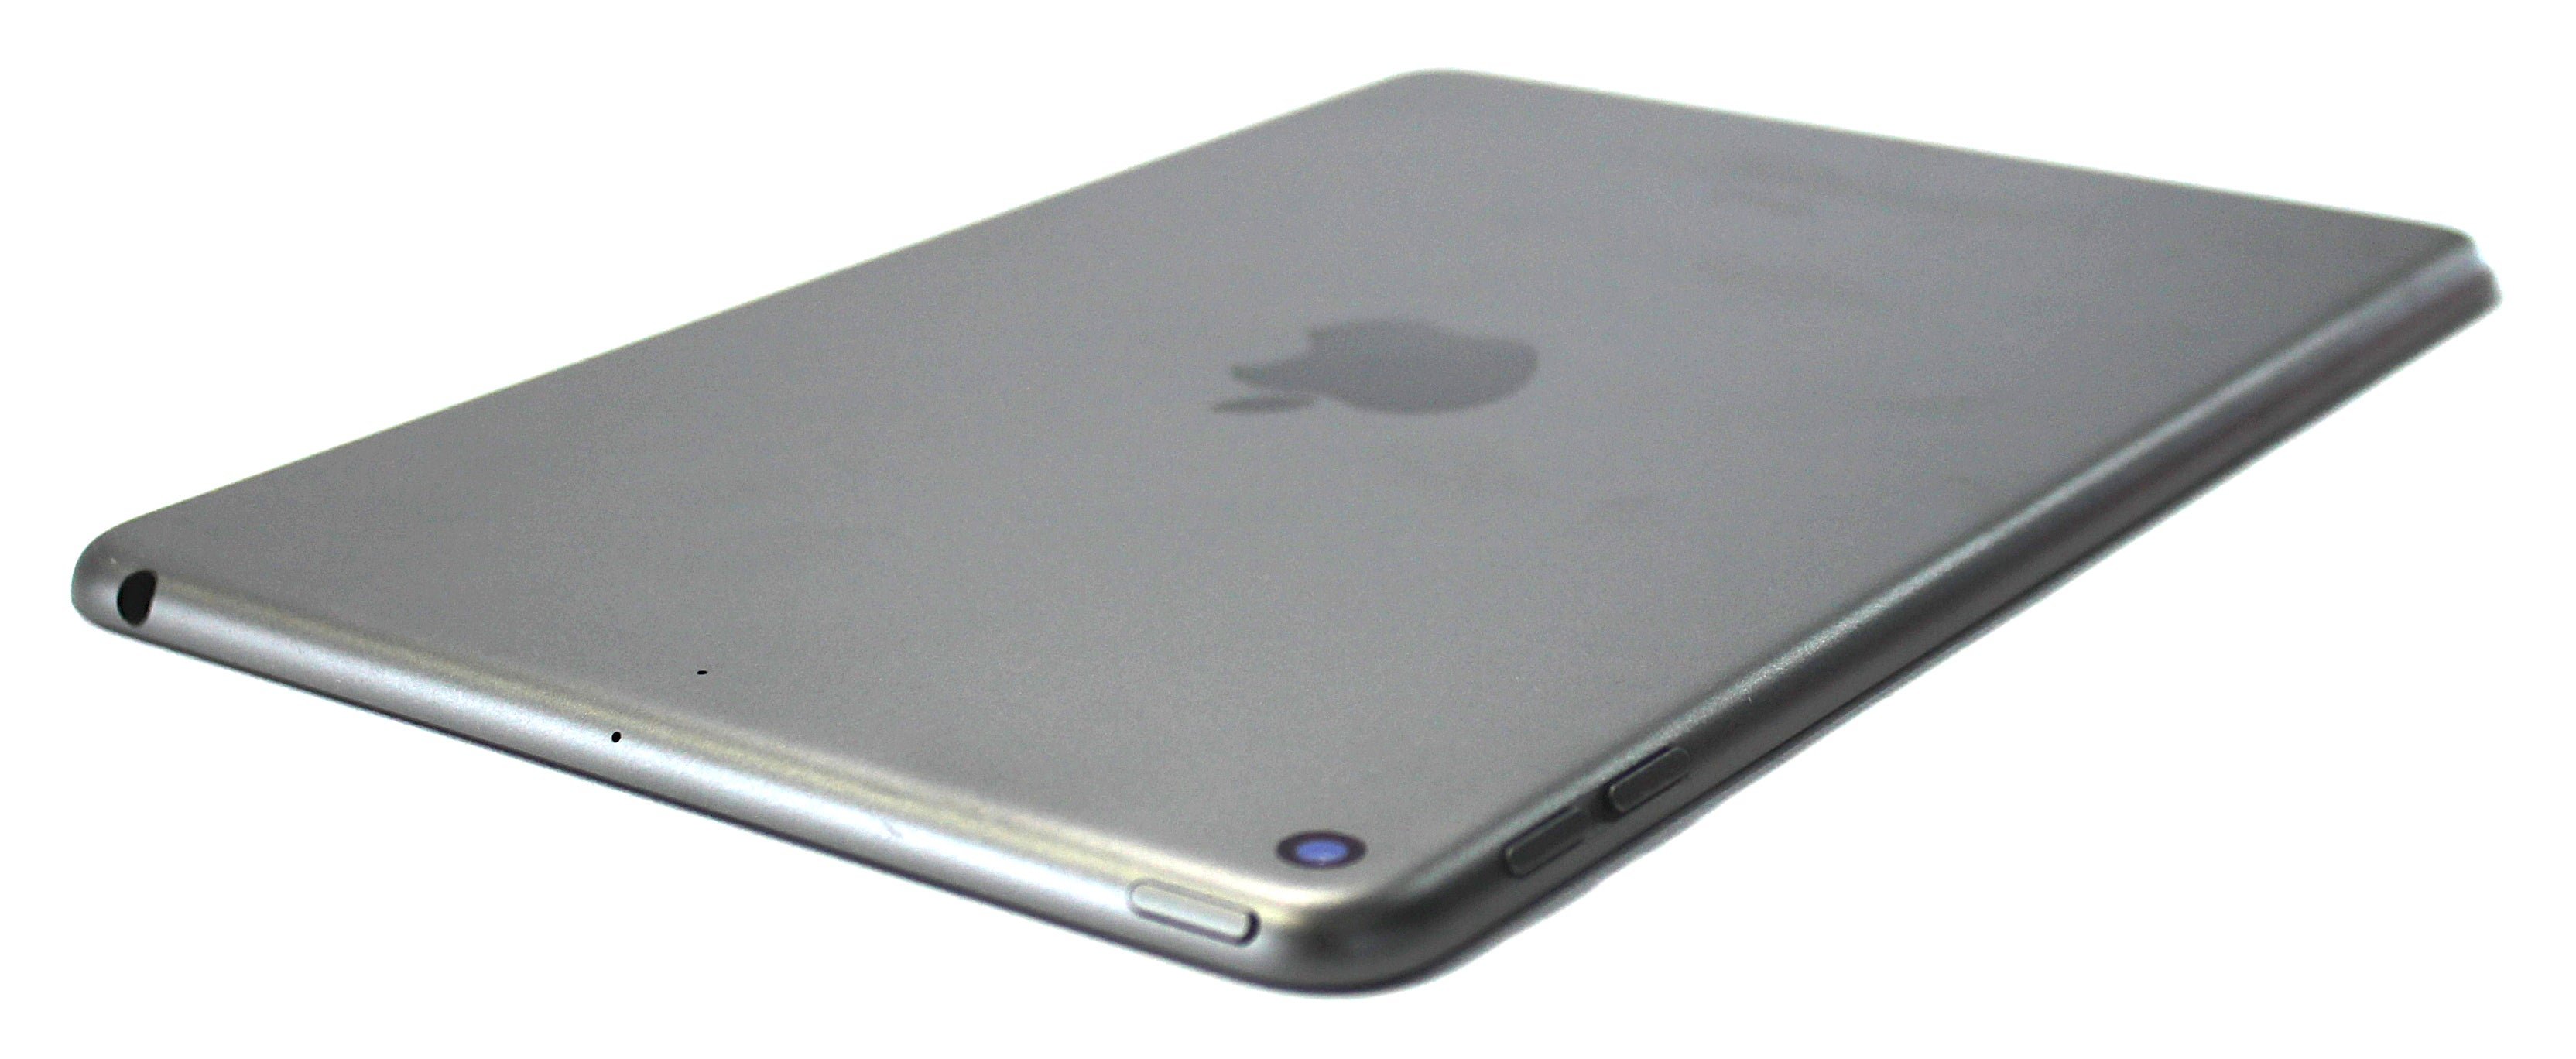 Apple iPad Mini 5th Generation Tablet, 64GB, WiFi, Space Gray, A2133